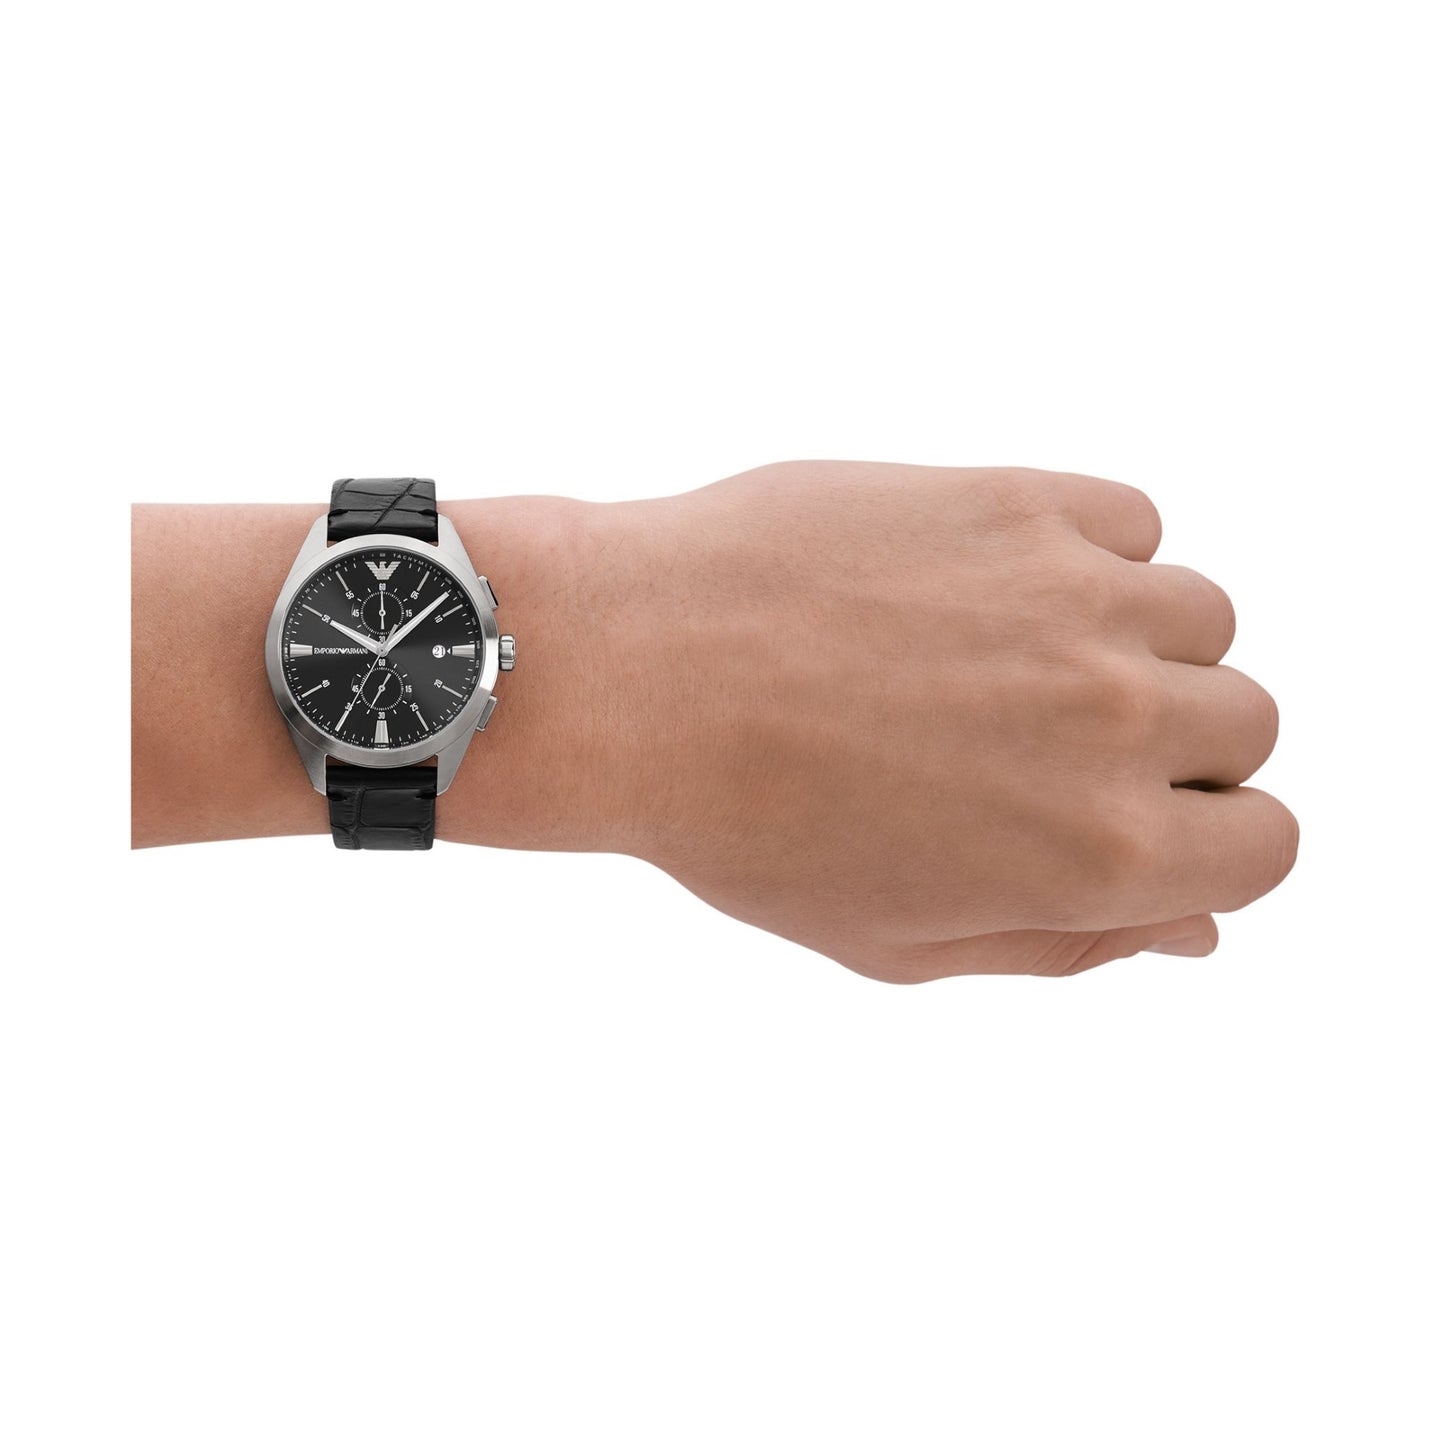 Emporio Armani 43mm Claudio Chronographic Black Leather Watch